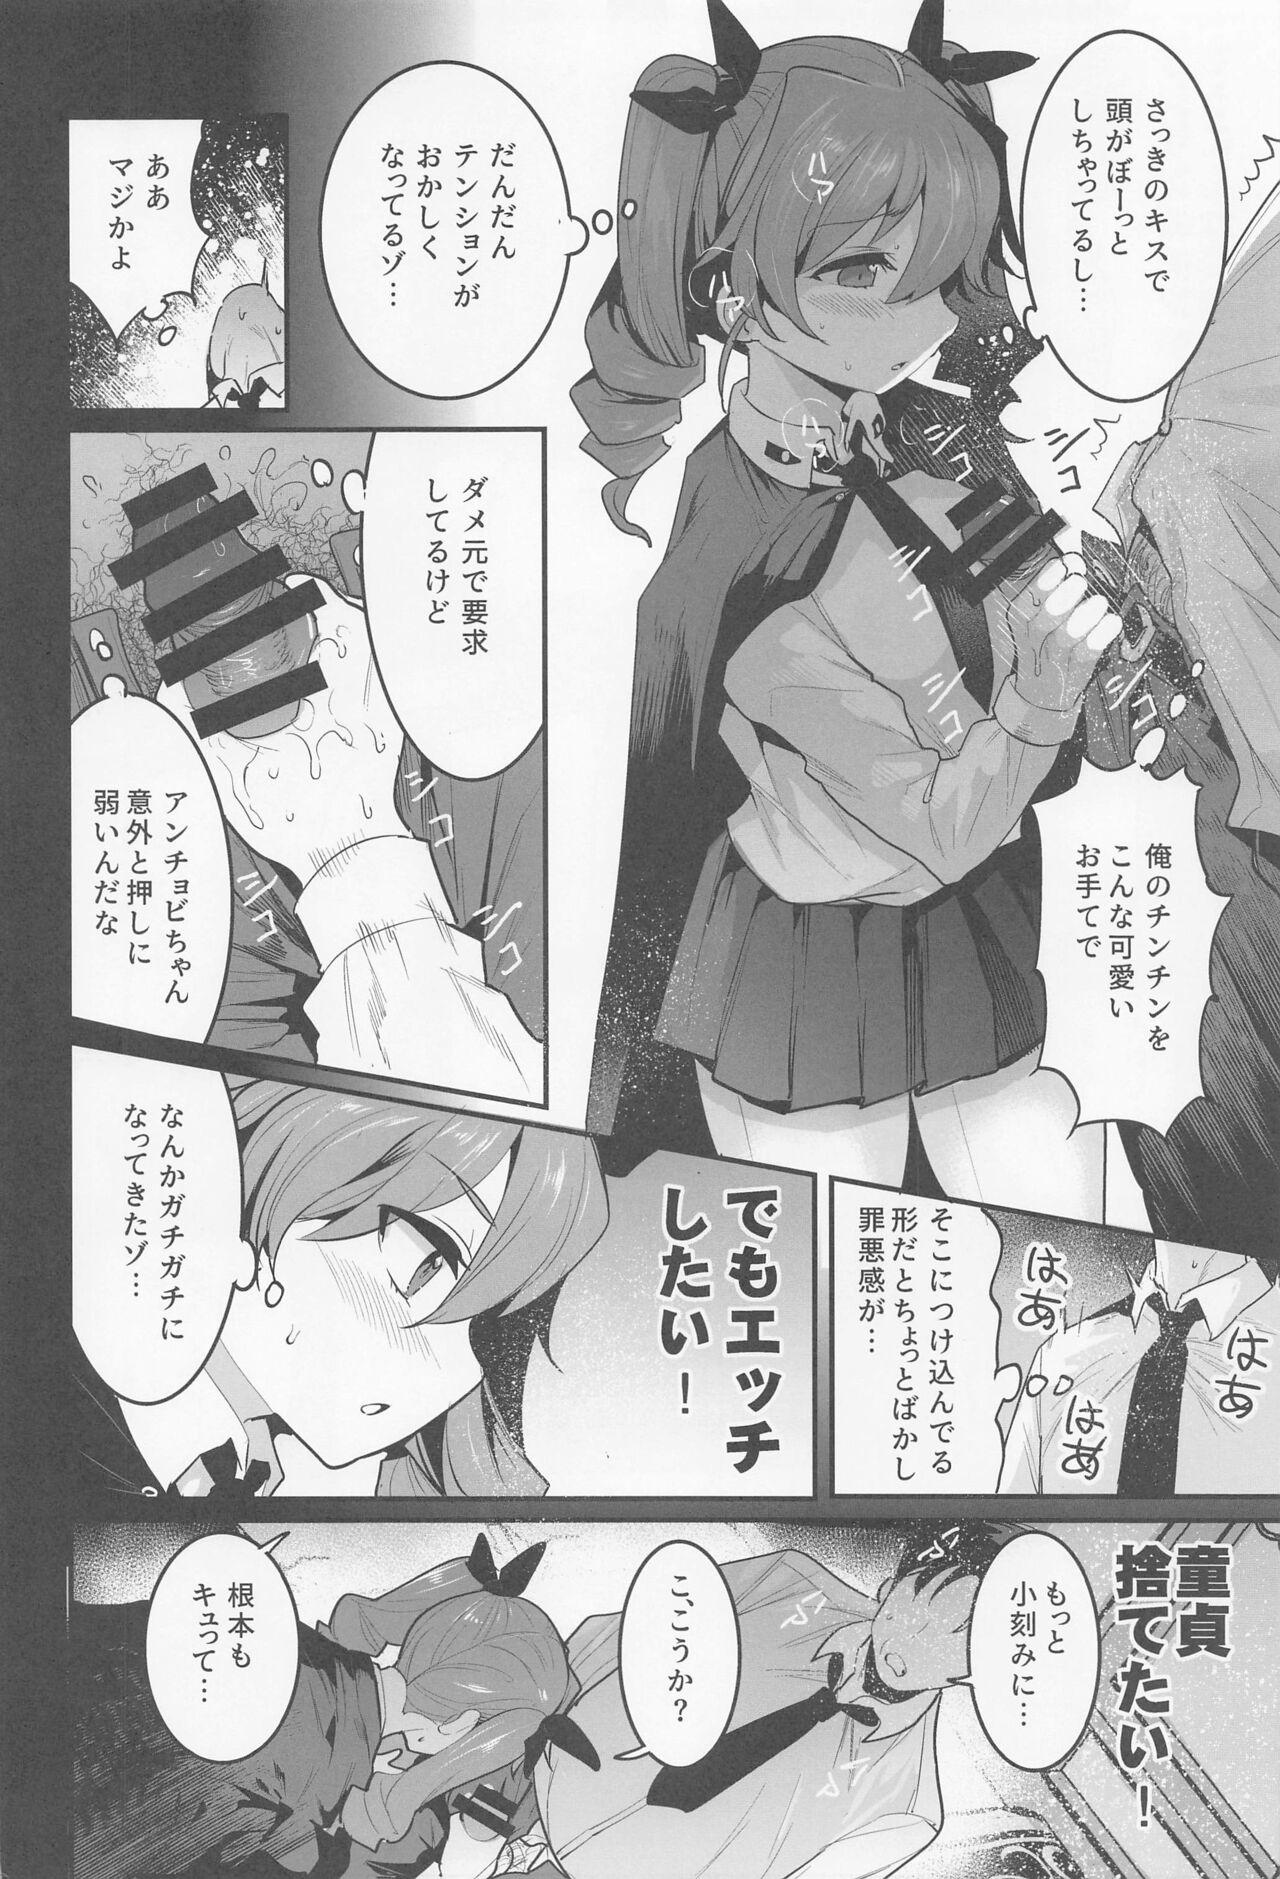 Bisex anchobi dogezadeonegaishitaraippatsuyarasetekuremashita - Girls und panzer Strapon - Page 7